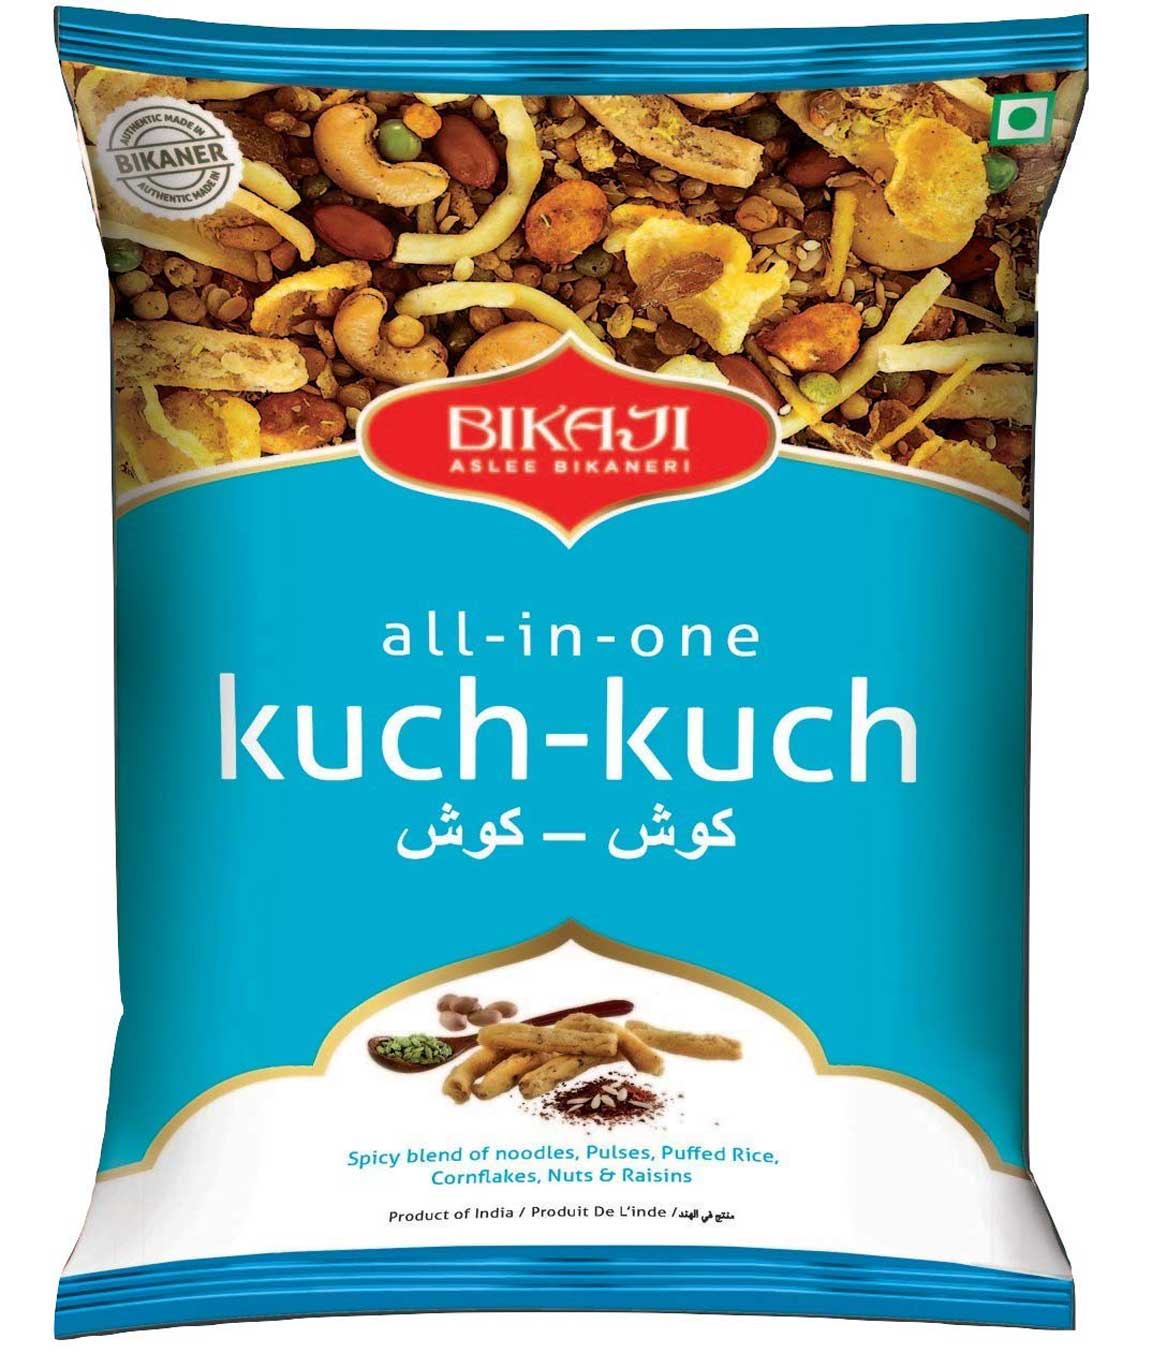 Bikaji Aslee Bikaneri All-in-one Kuch-Kuch Vegetarian Indian Snack (200 g)